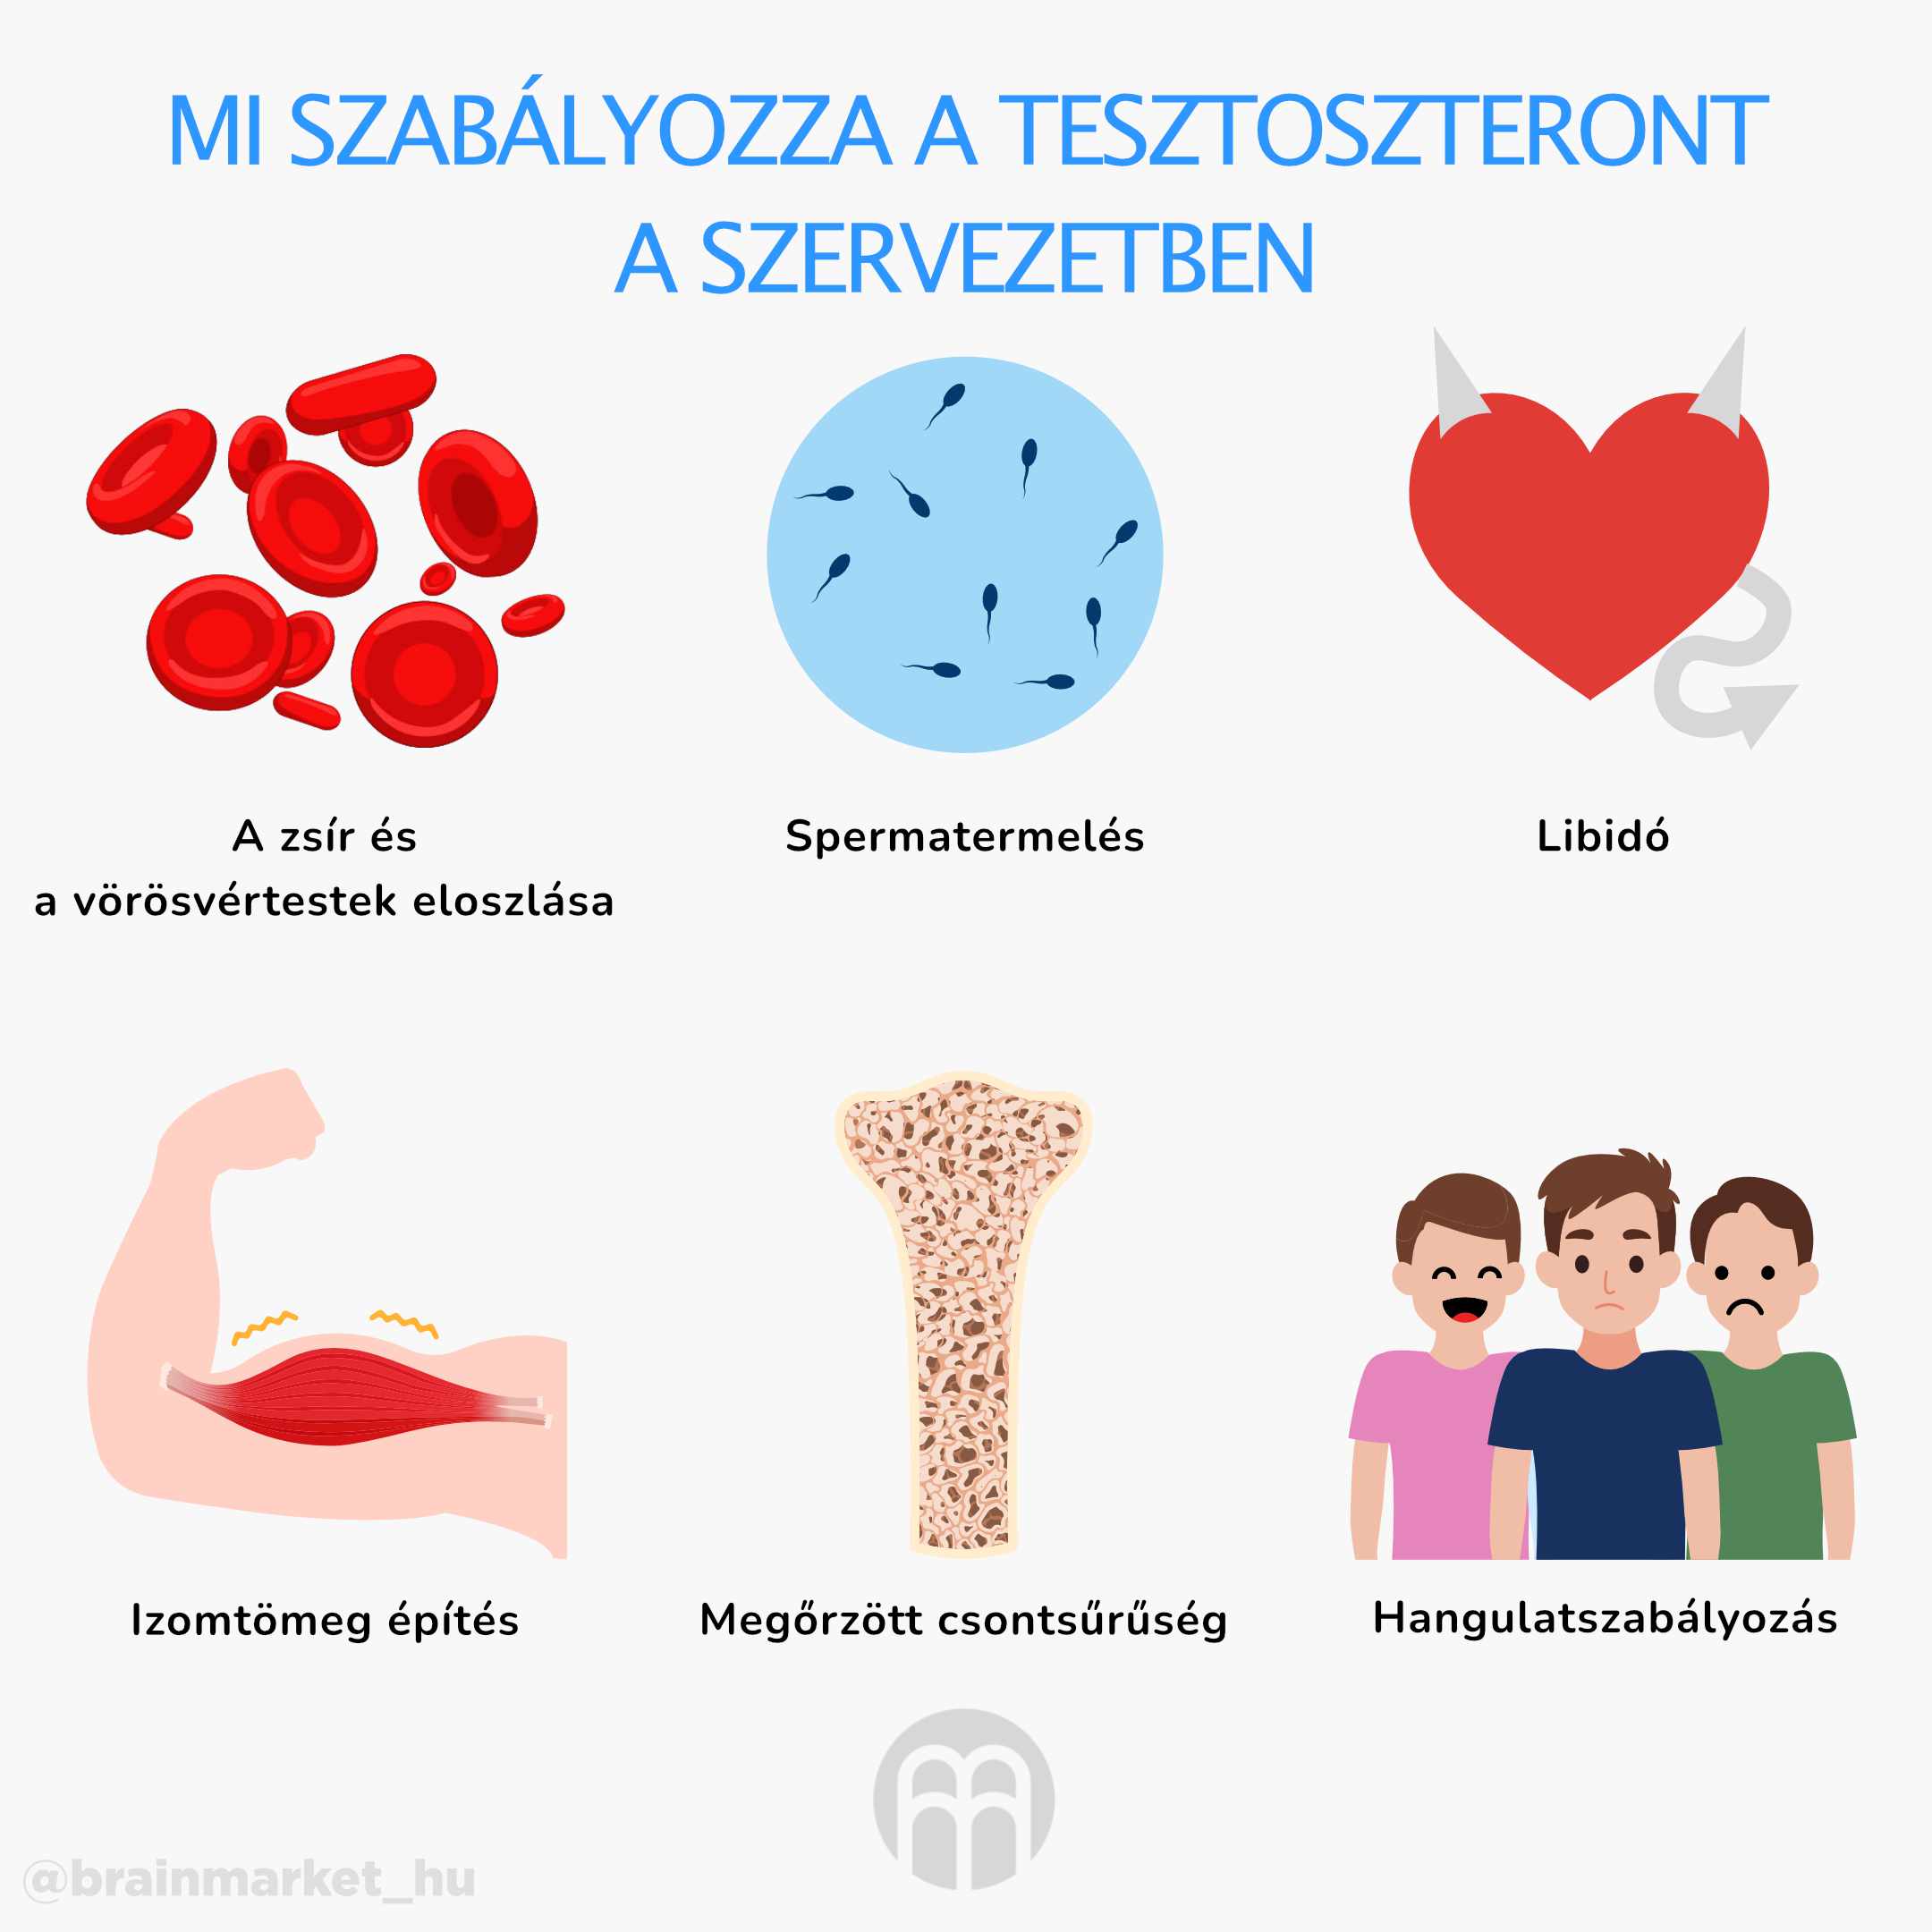 tesztoszteron-agypiac-infographic-cz (1)